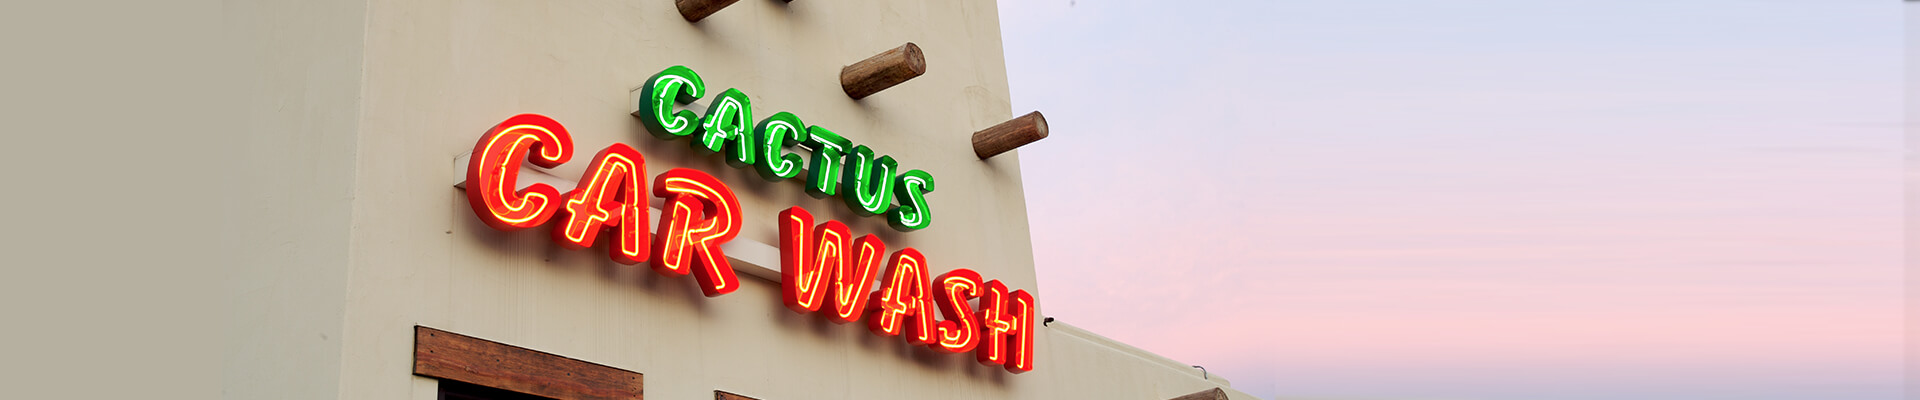 Cactus Milton Location Wins Best Car Wash 2019!